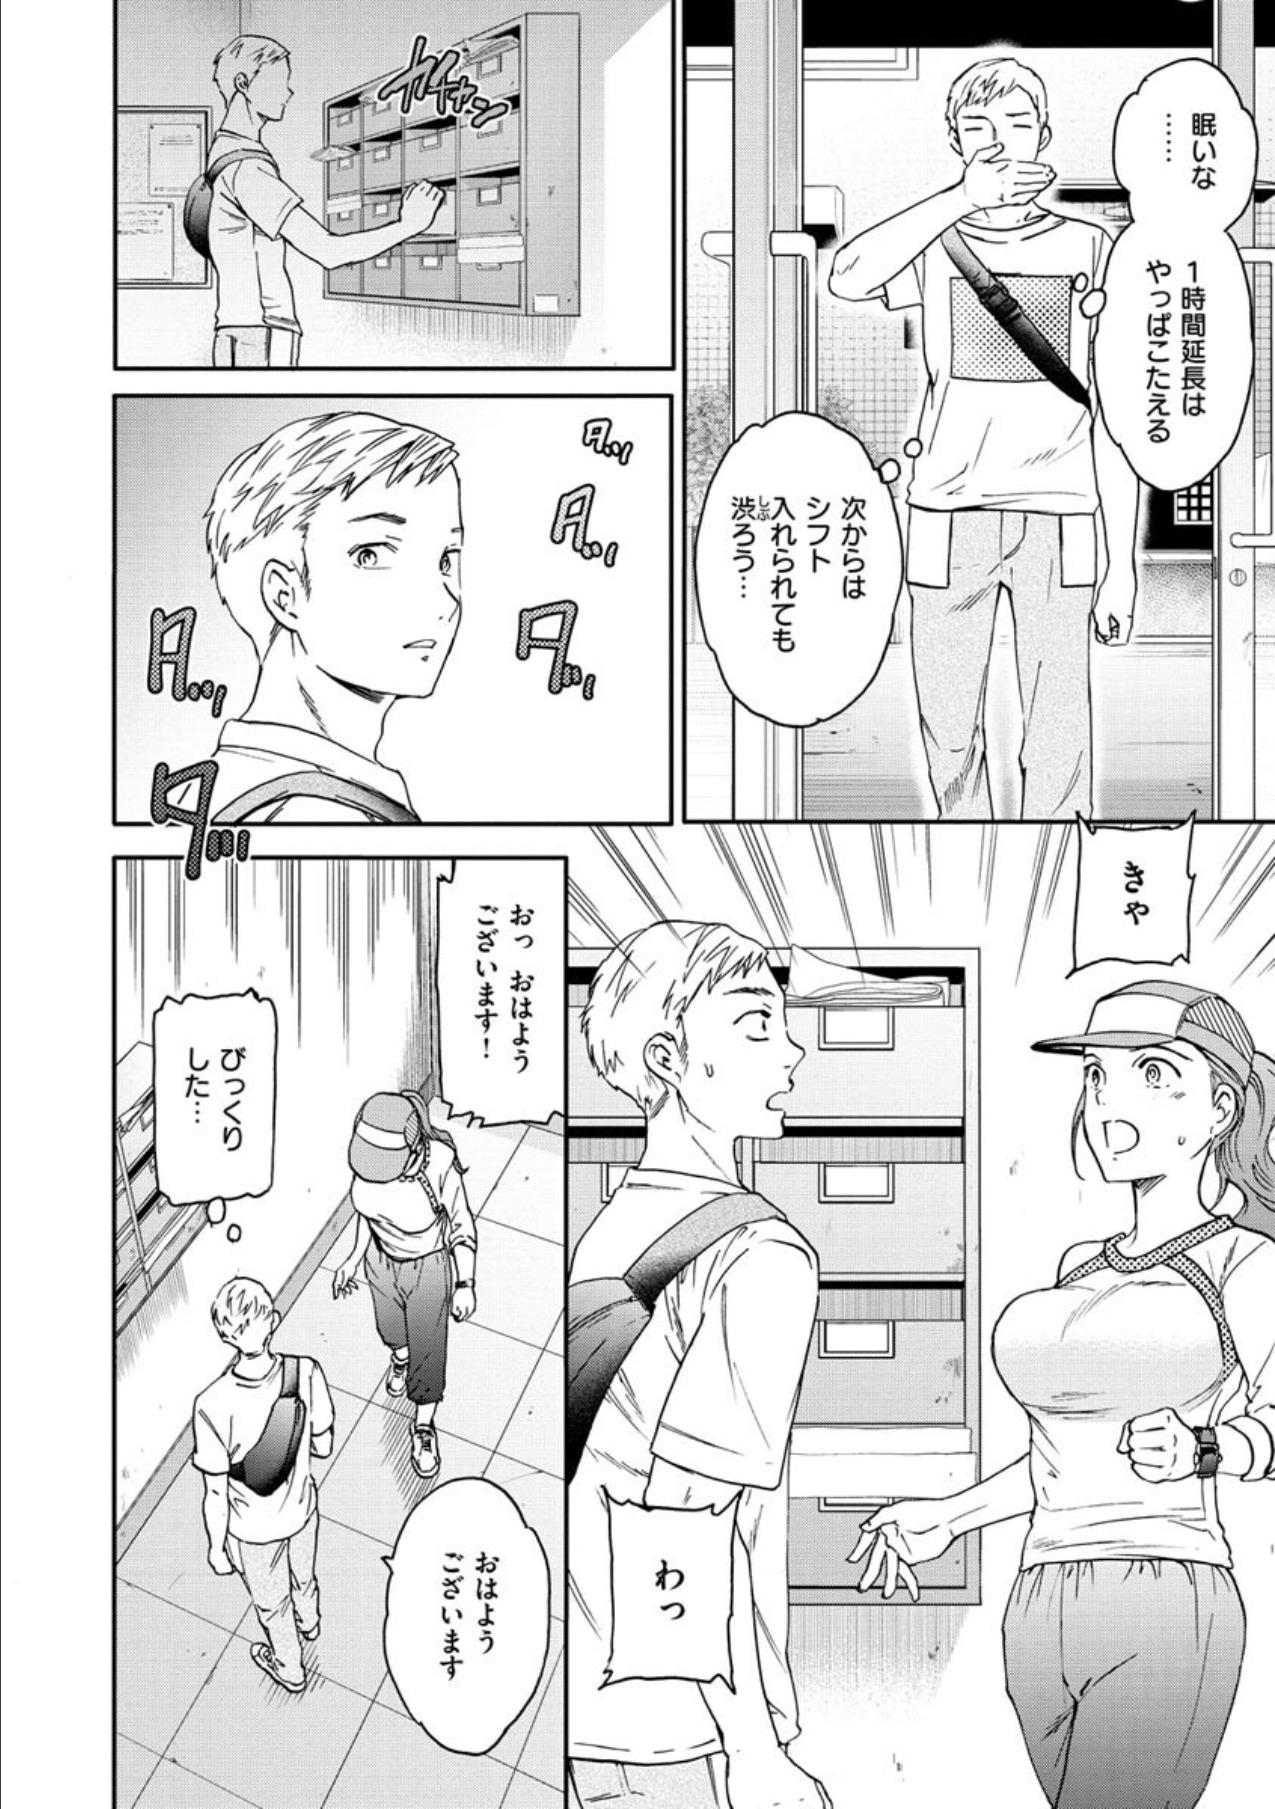 Curves Suwarete, Sonosakihe, Okuhe Chudai - Page 4